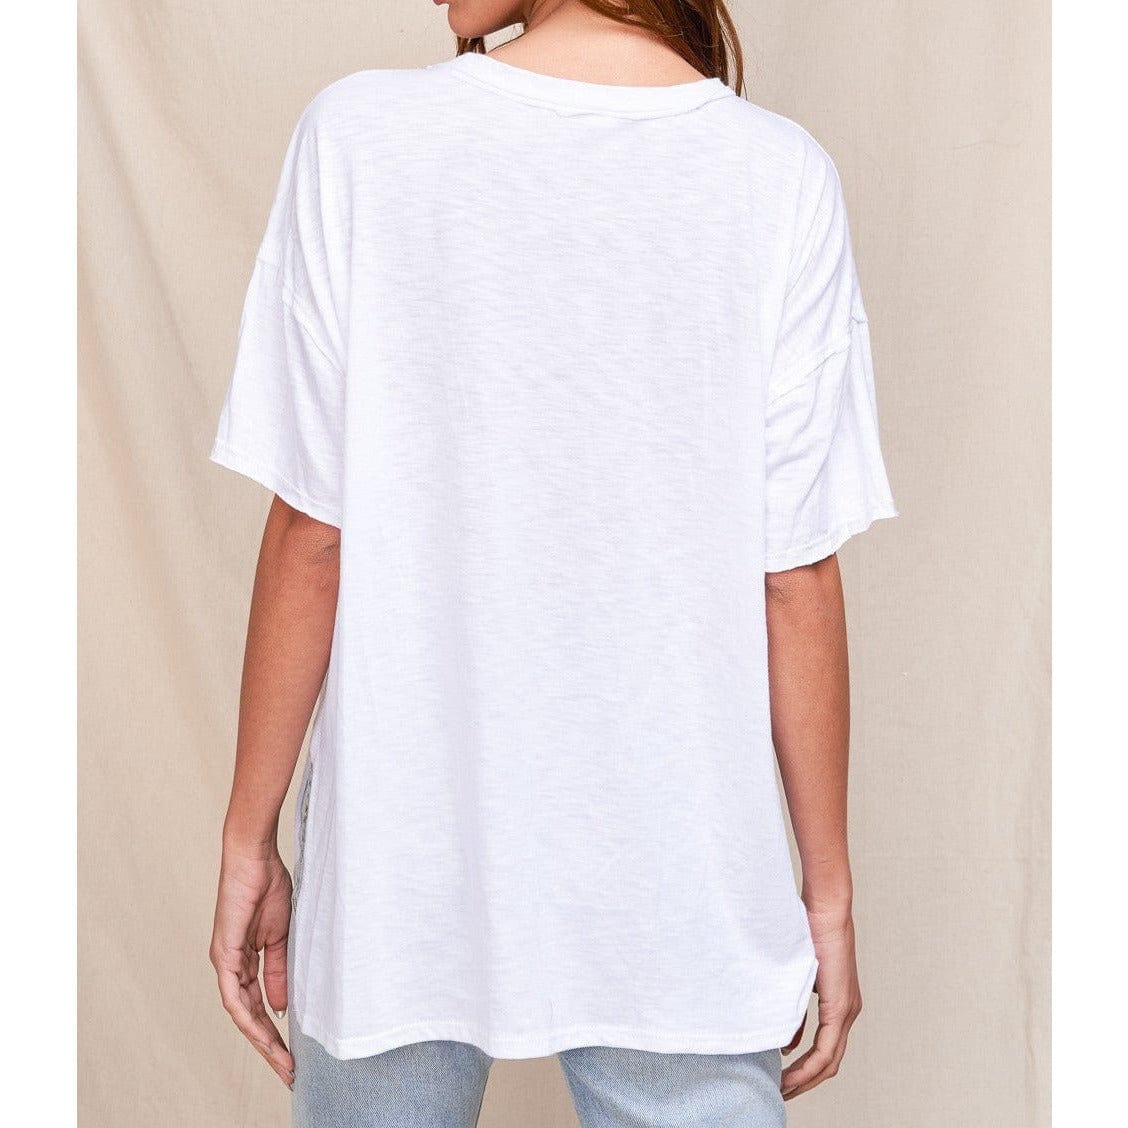 Women's oversized Raw Hem essential T-shirt Tops TheFringeCultureCollective